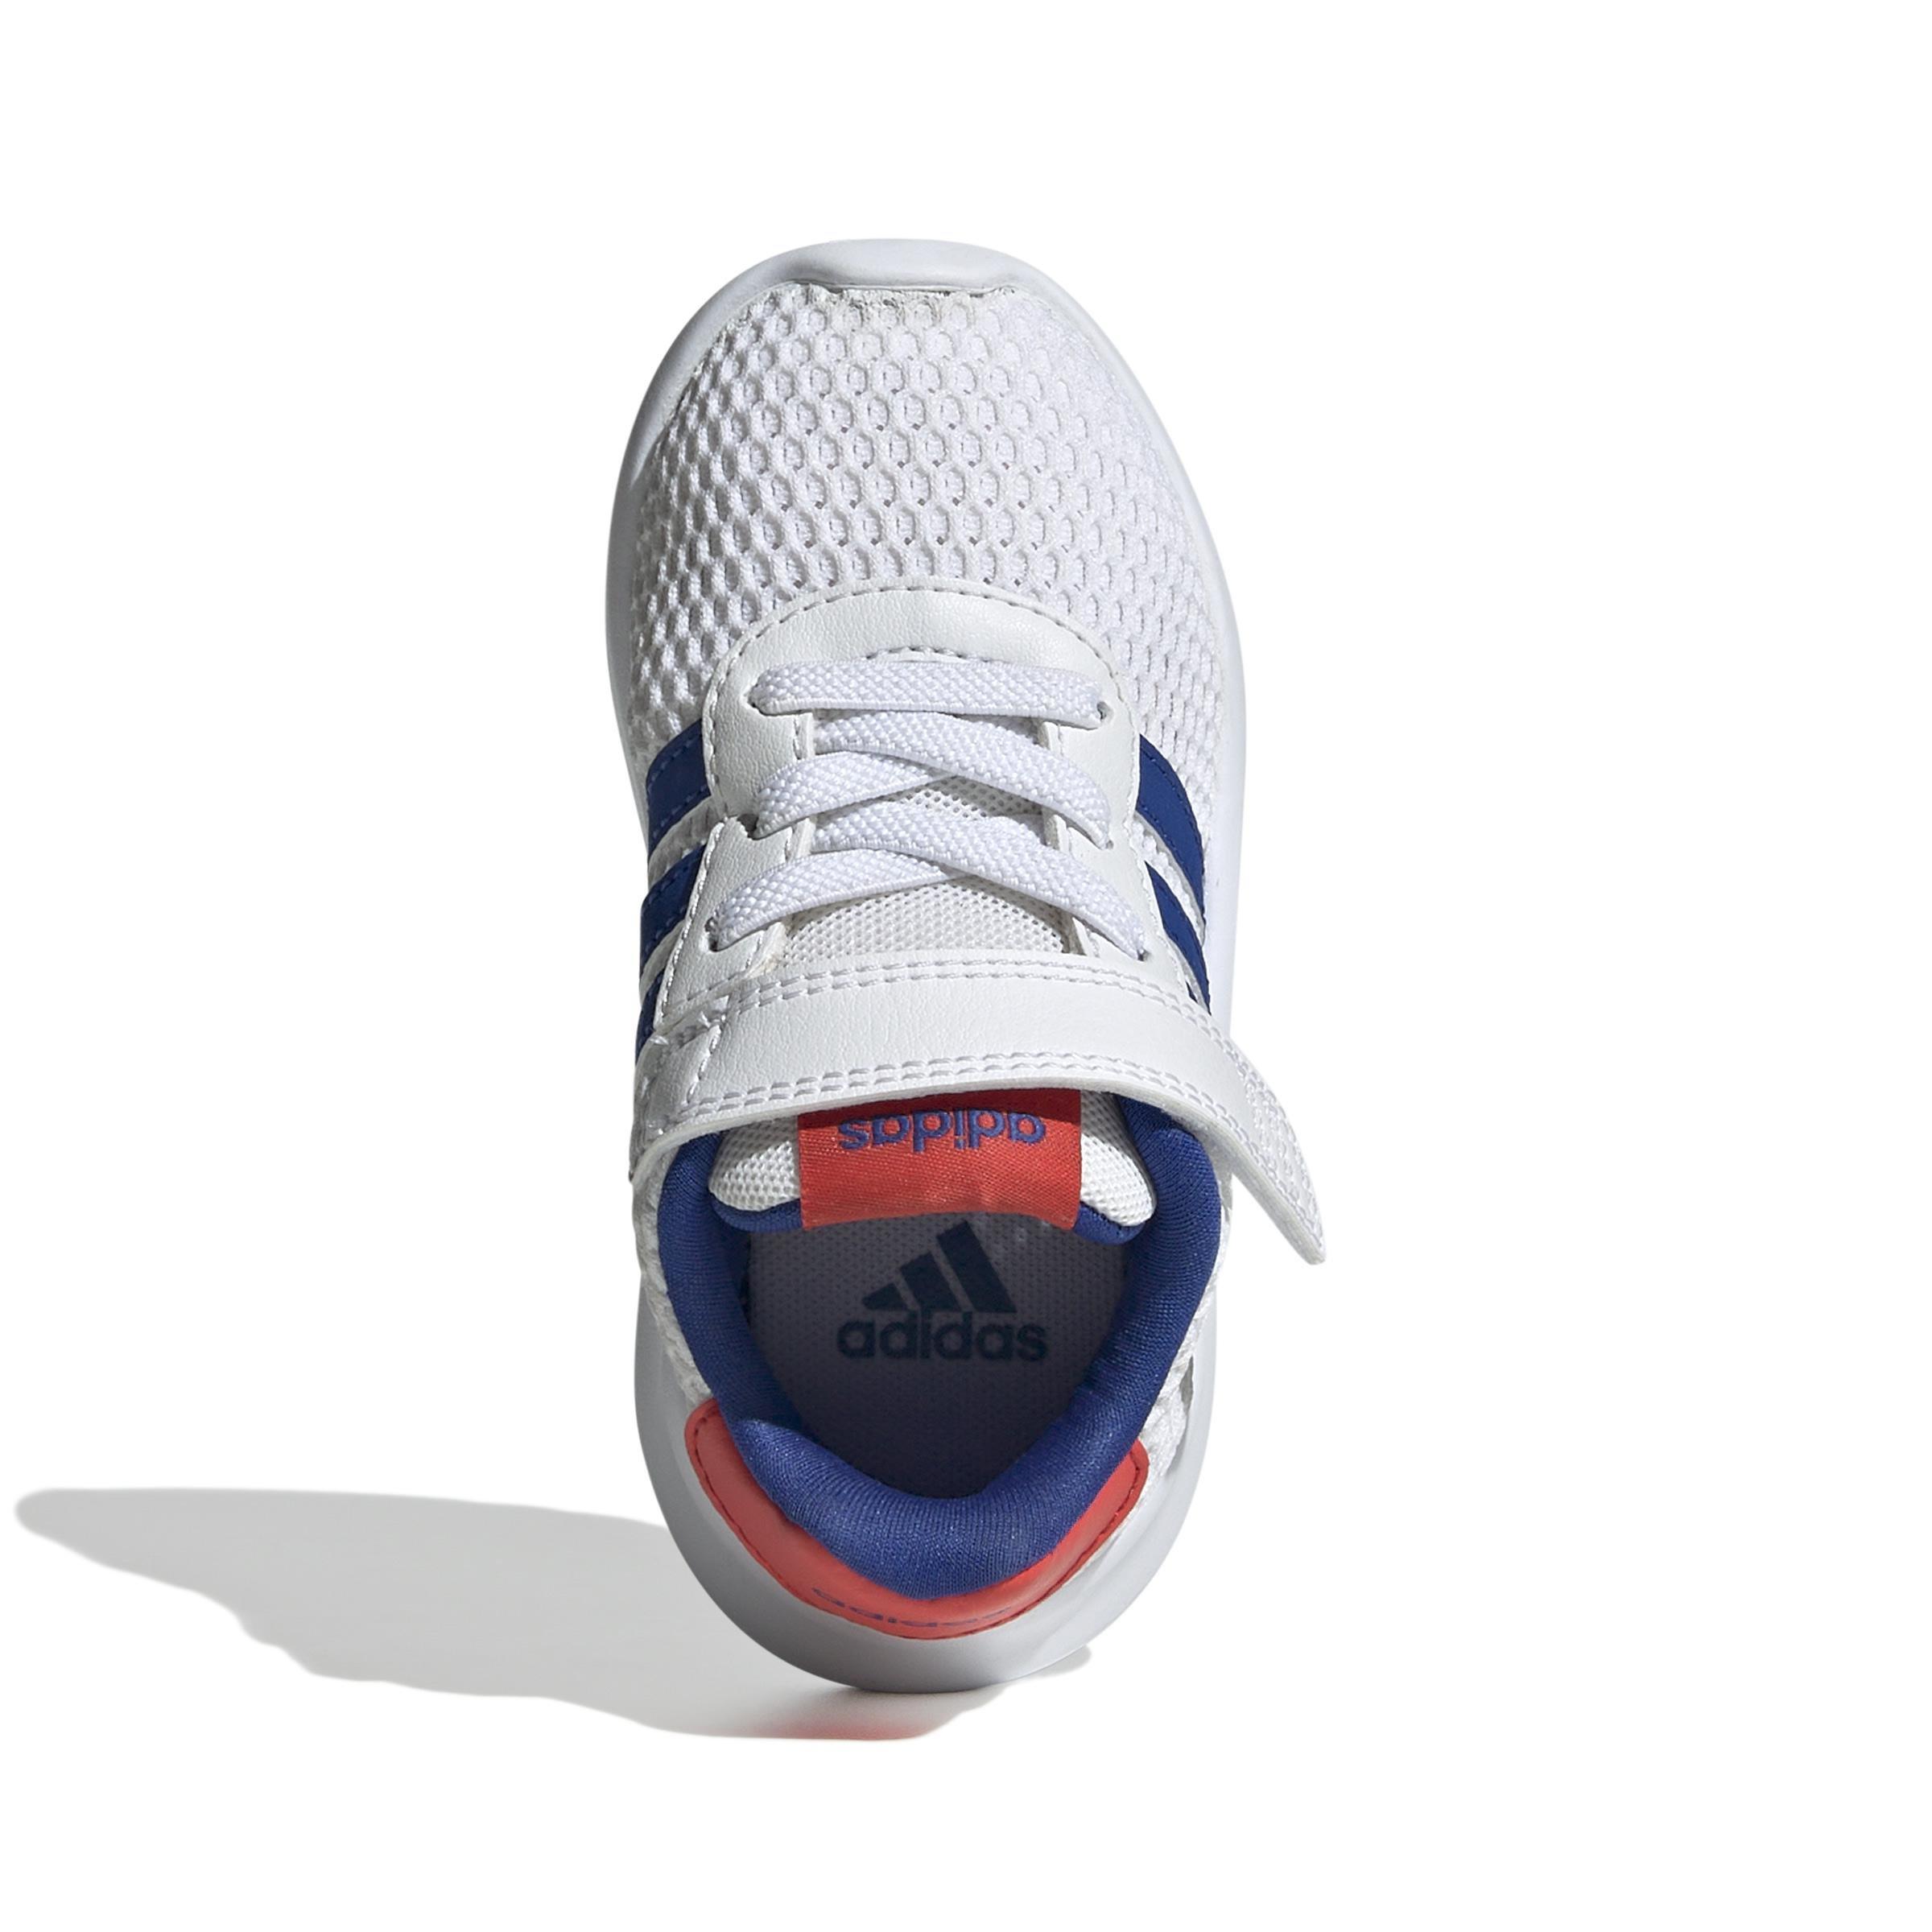 adidas - Kids Unisex Lite Racer 3.0 Shoes, White